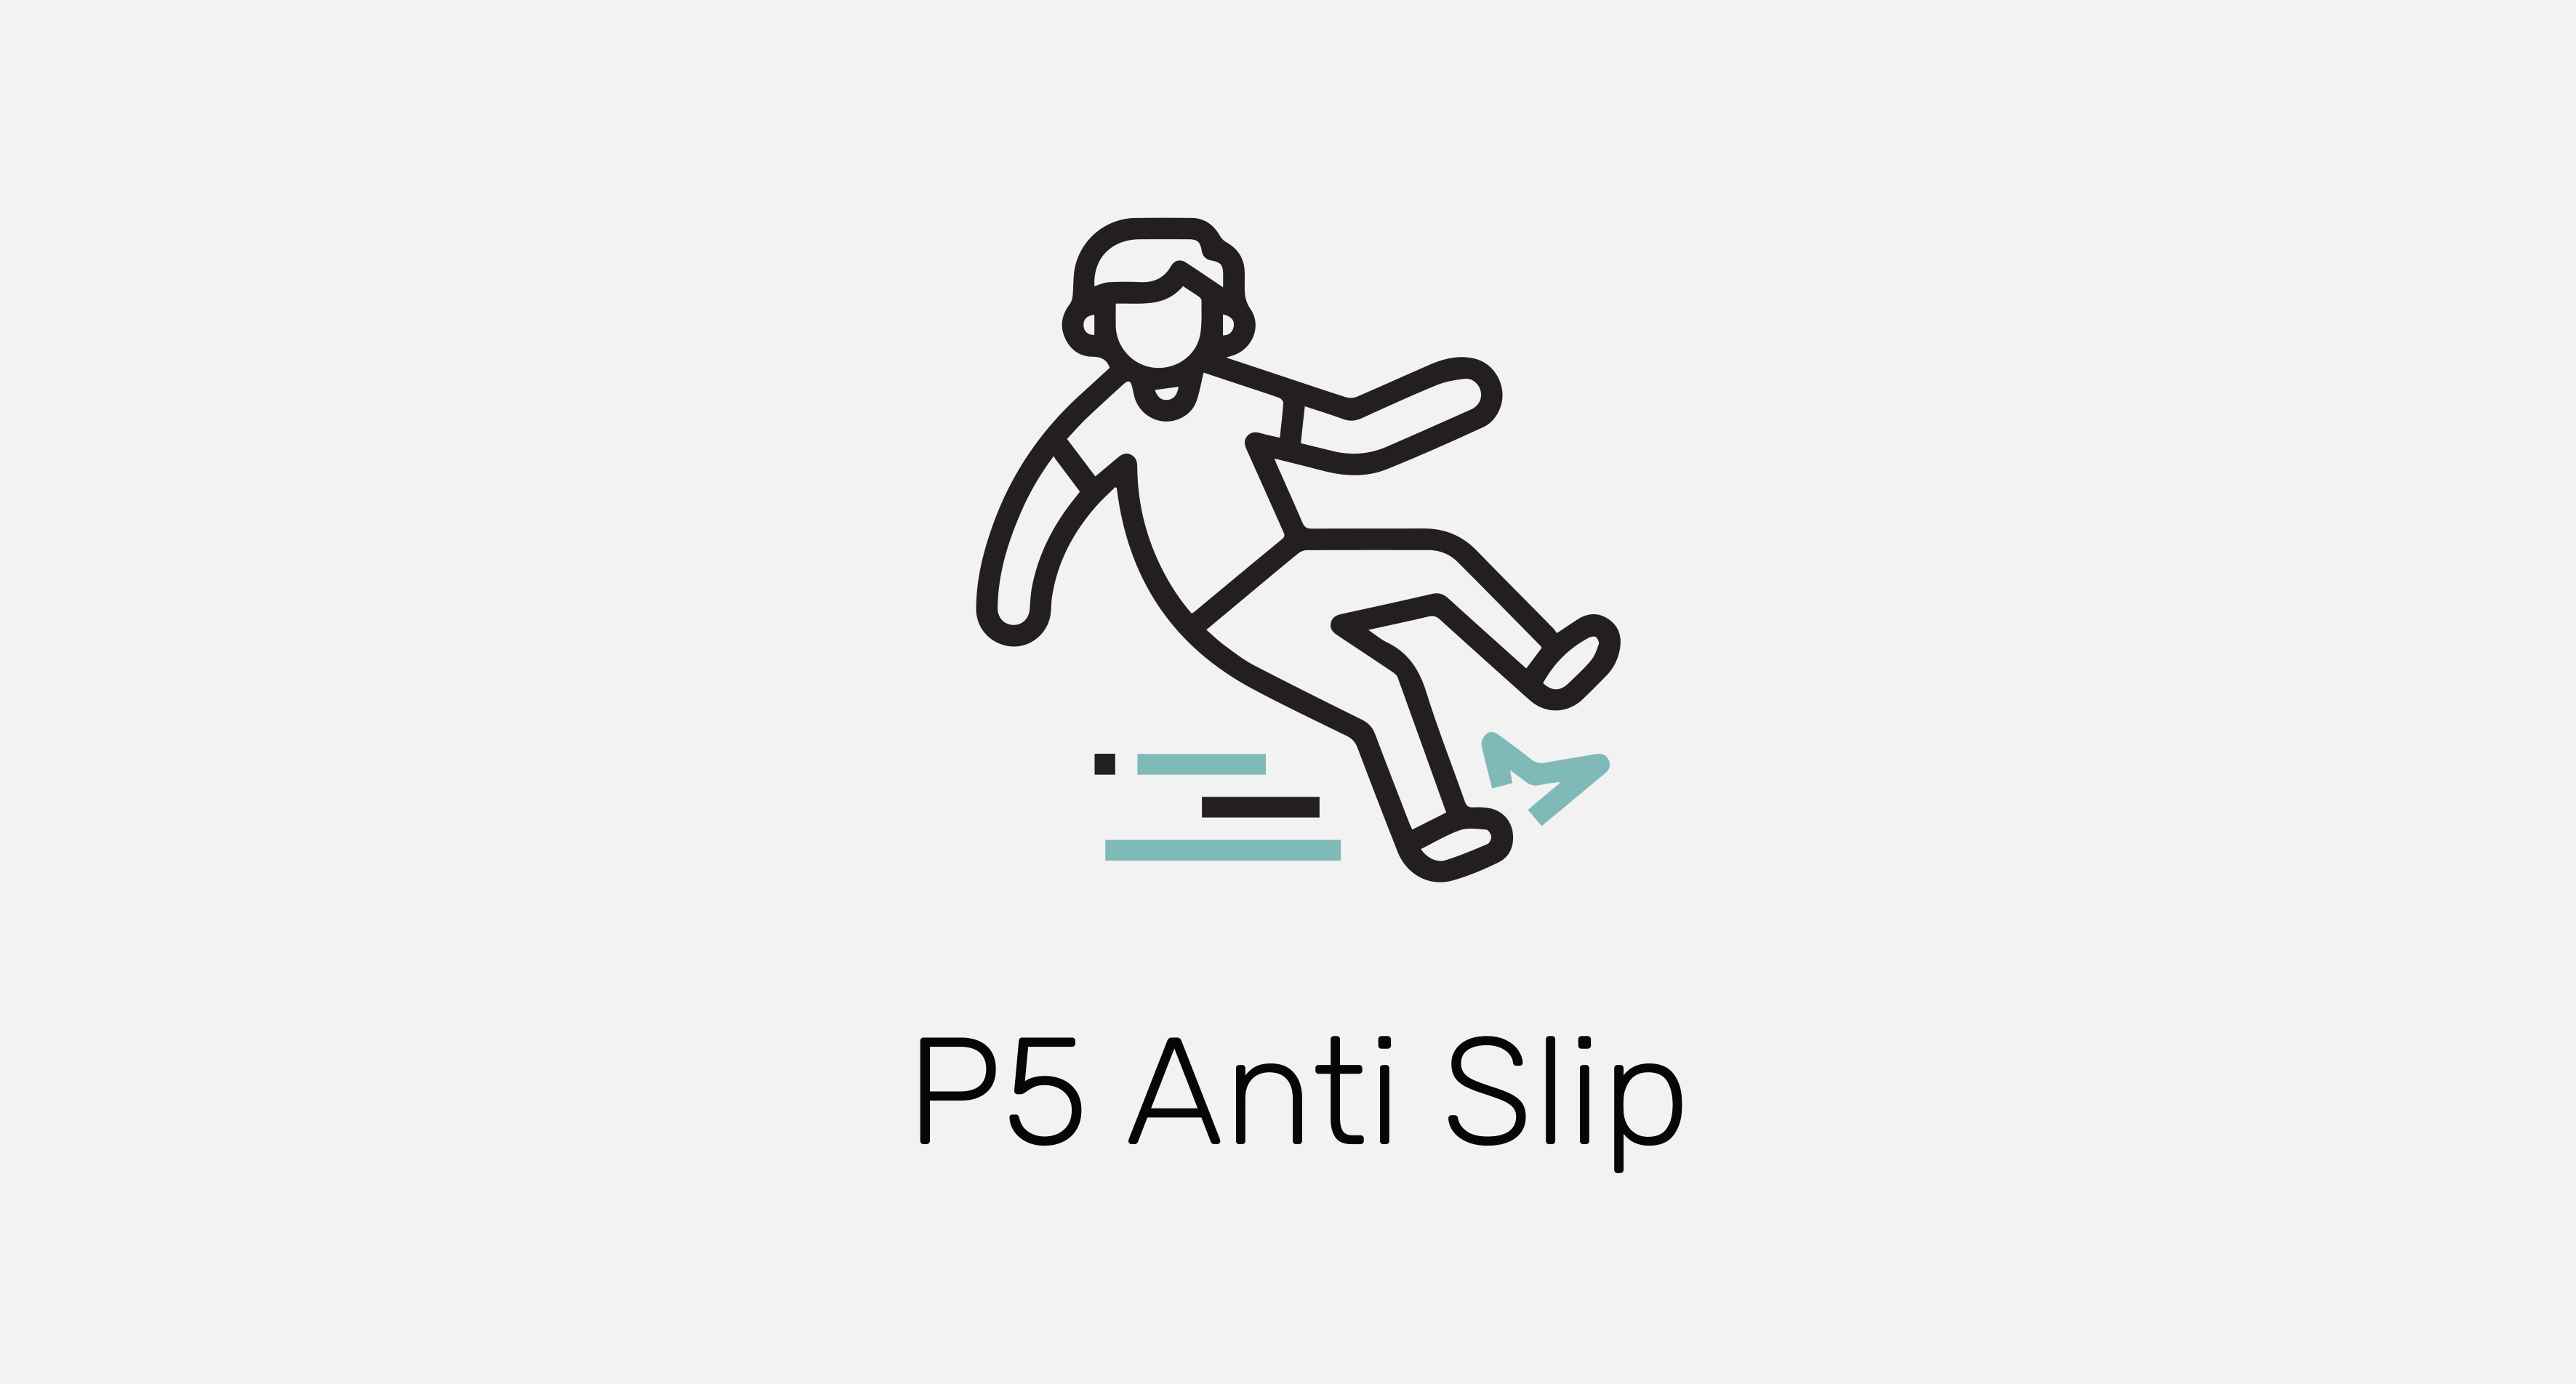 P5 Anti Slip